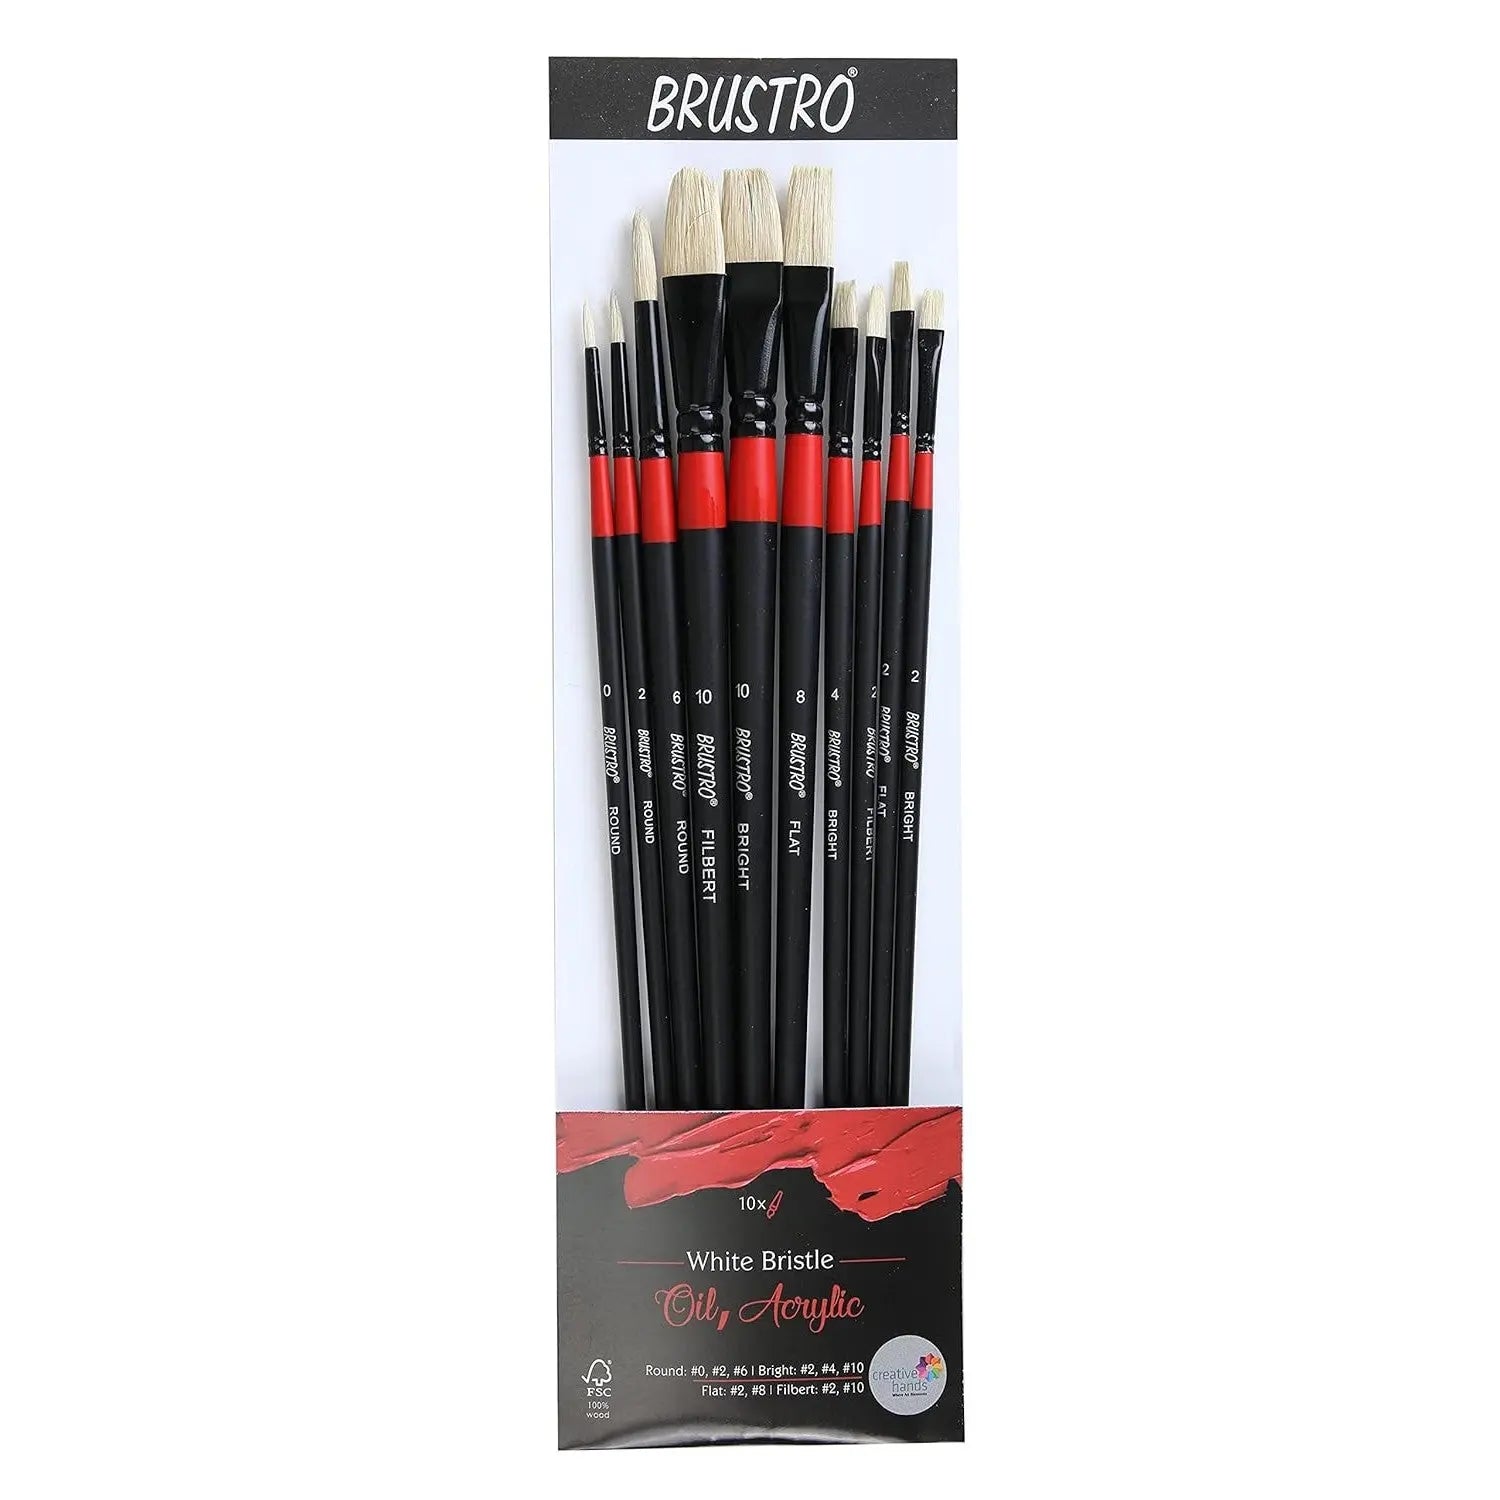 Brustro White Bristle Oil, Acrylic Colour Round  Brush Set Of 10 Brustro